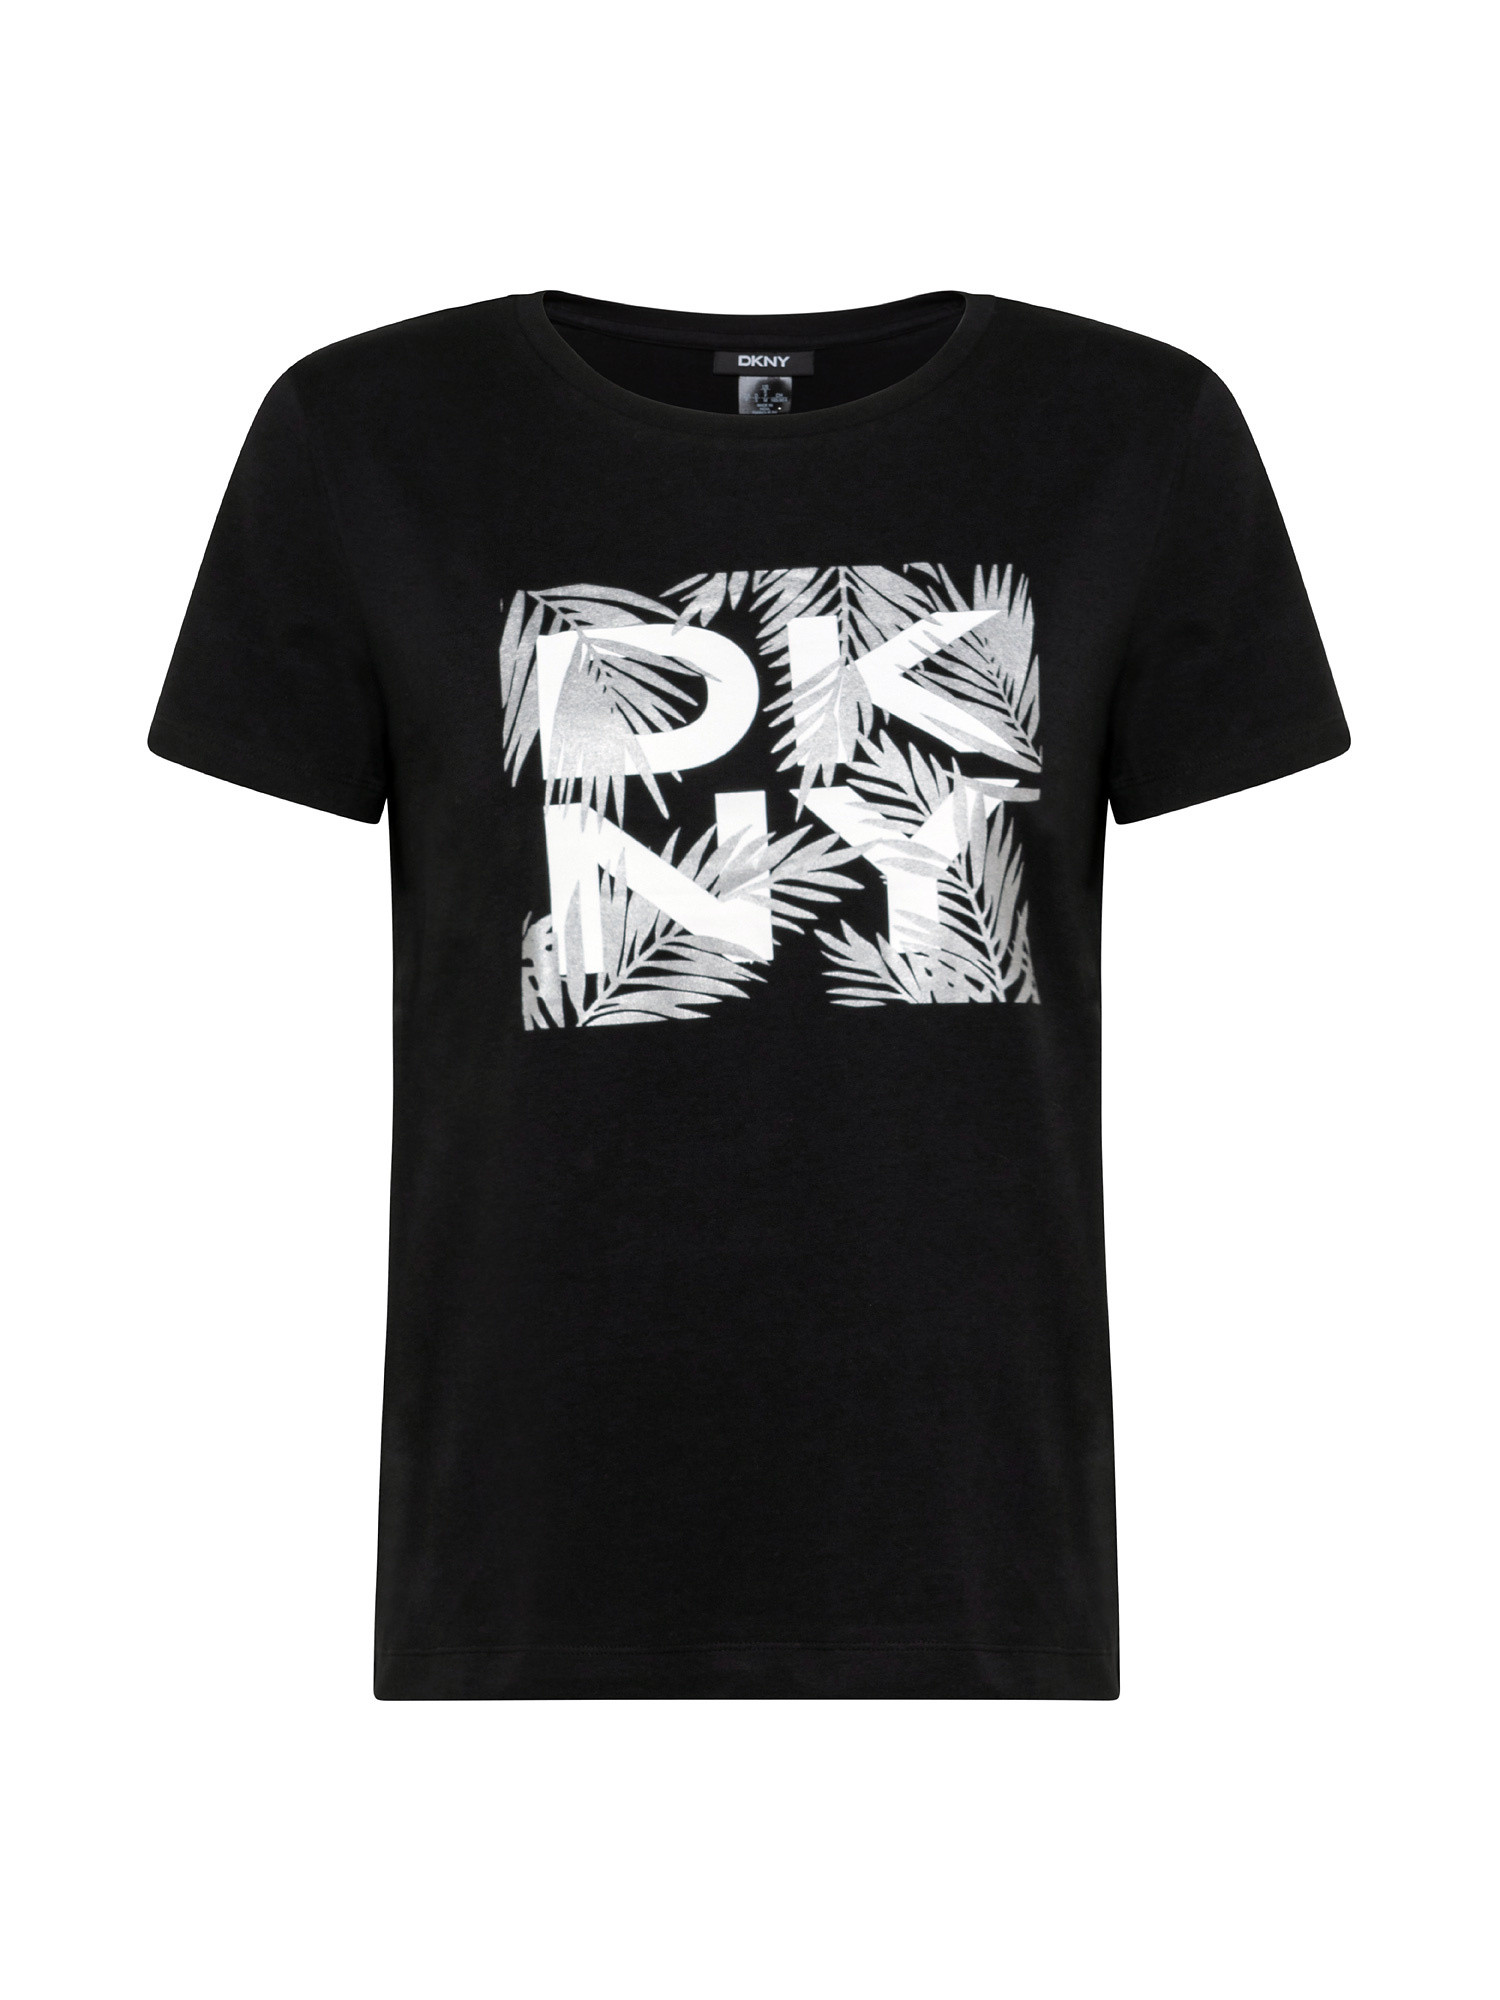 Palm logo T-shirt, Black, large image number 0